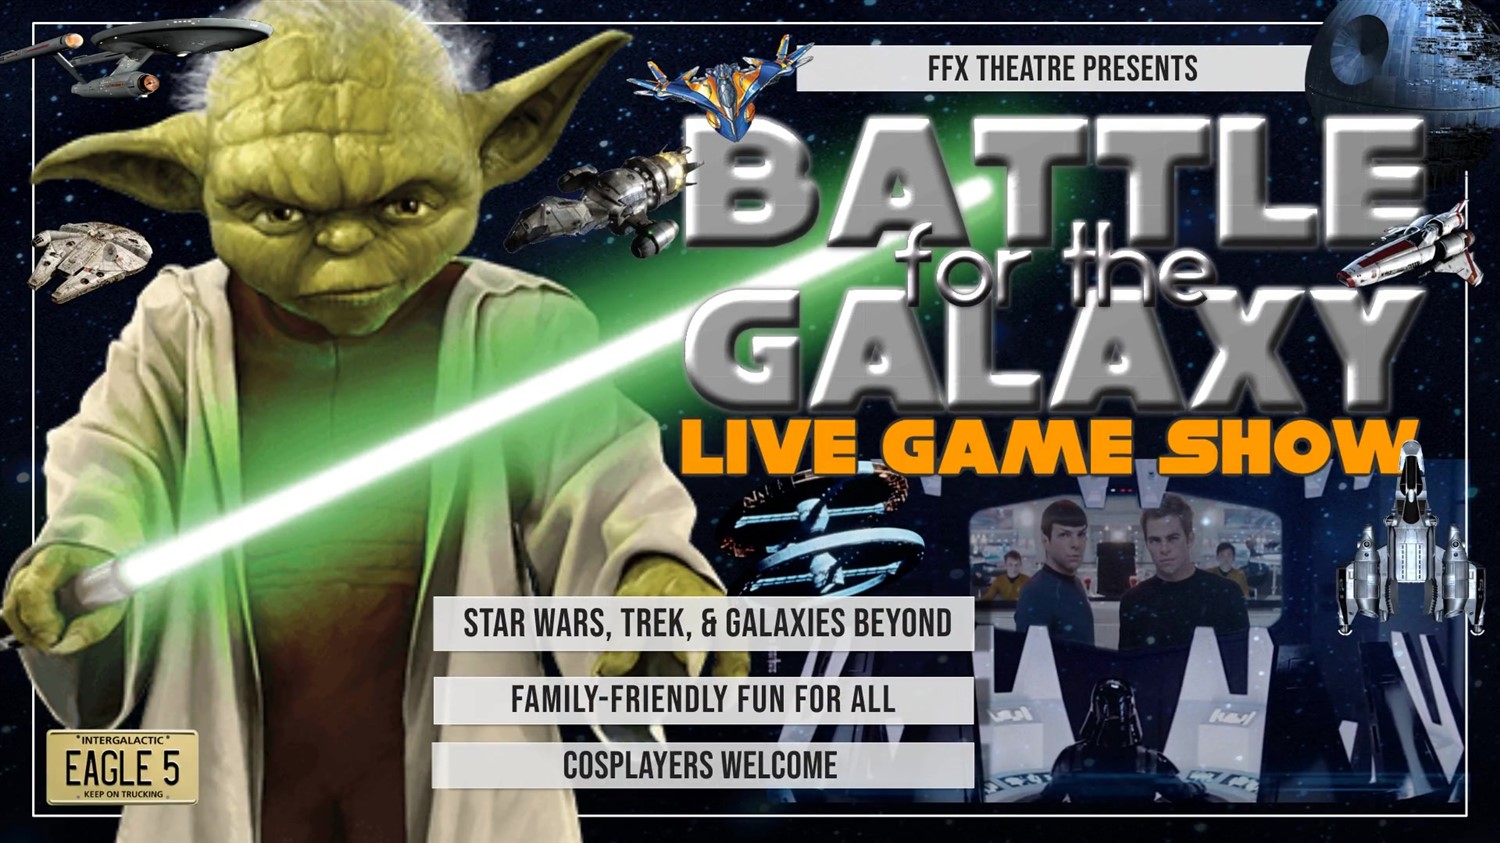 Battle for the Galaxy: LIVE GAME SHOW Sci-Fun Fun! on feb. 24, 19:00@FFX Theatre - Elegir asientoCompra entradas y obtén información enFamily Fun Xperience tickets.ffxshow.org